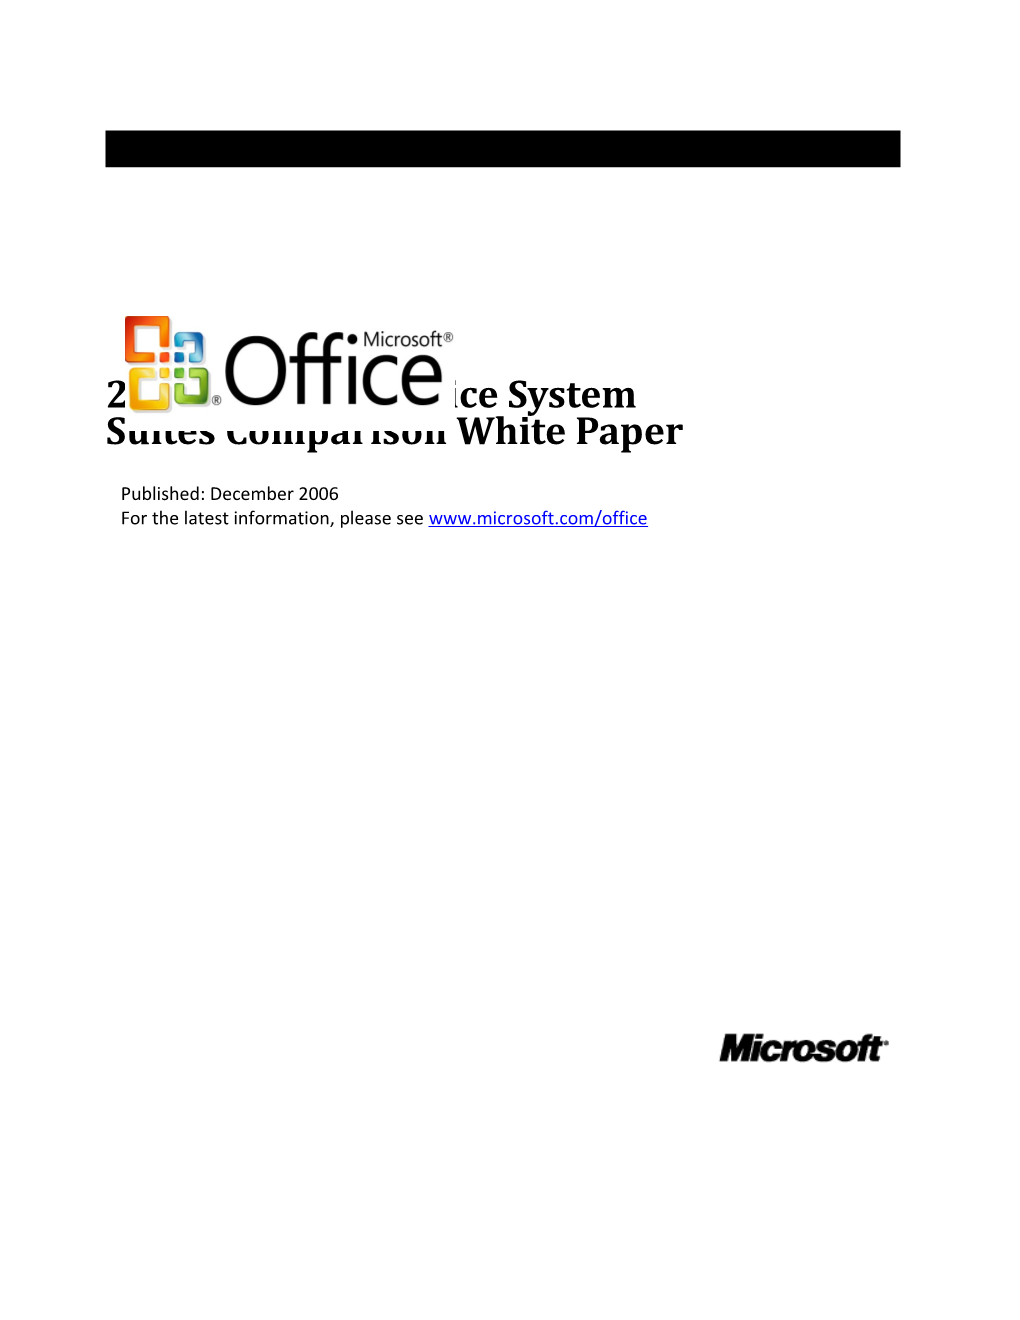 2007 Microsoft Office System Suites Comparisonwhite Paper